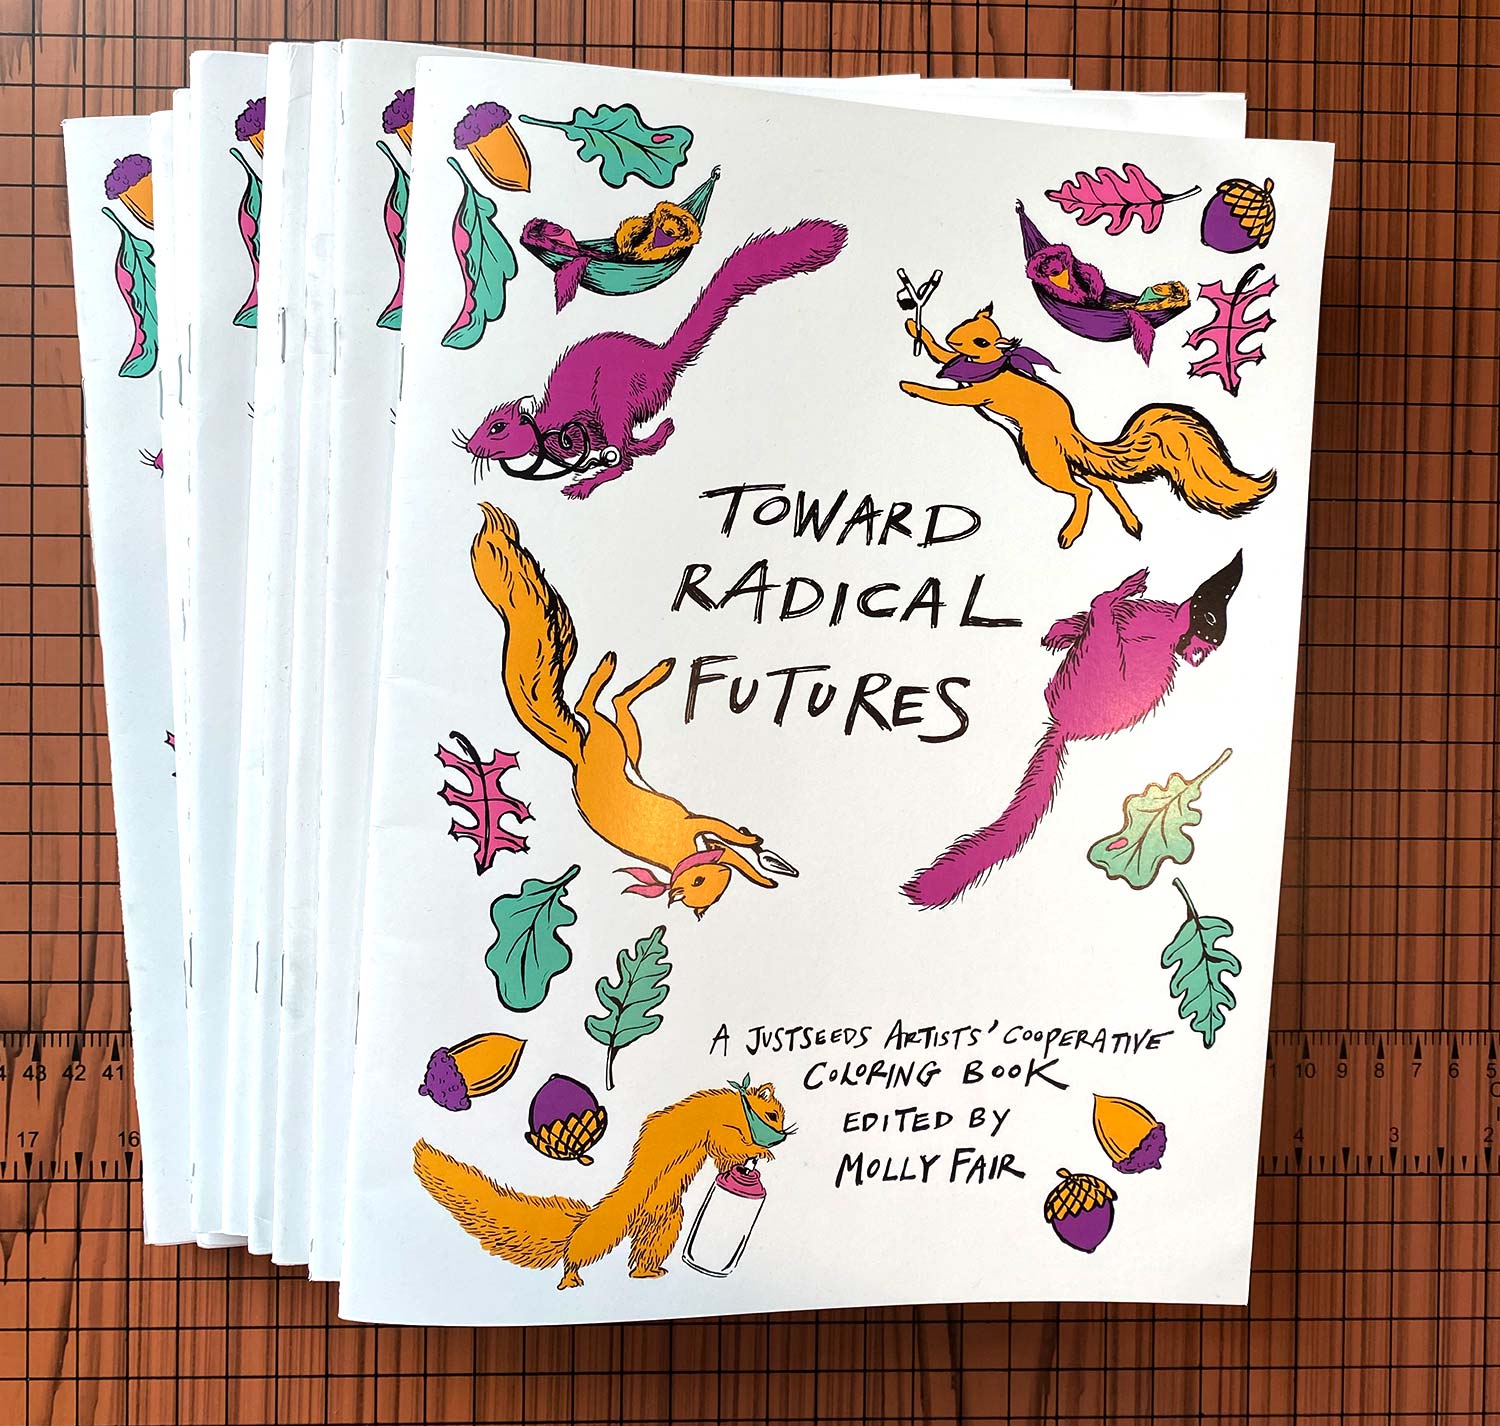 Justseeds  Toward Radical Futures: a Justseeds Coloring Book